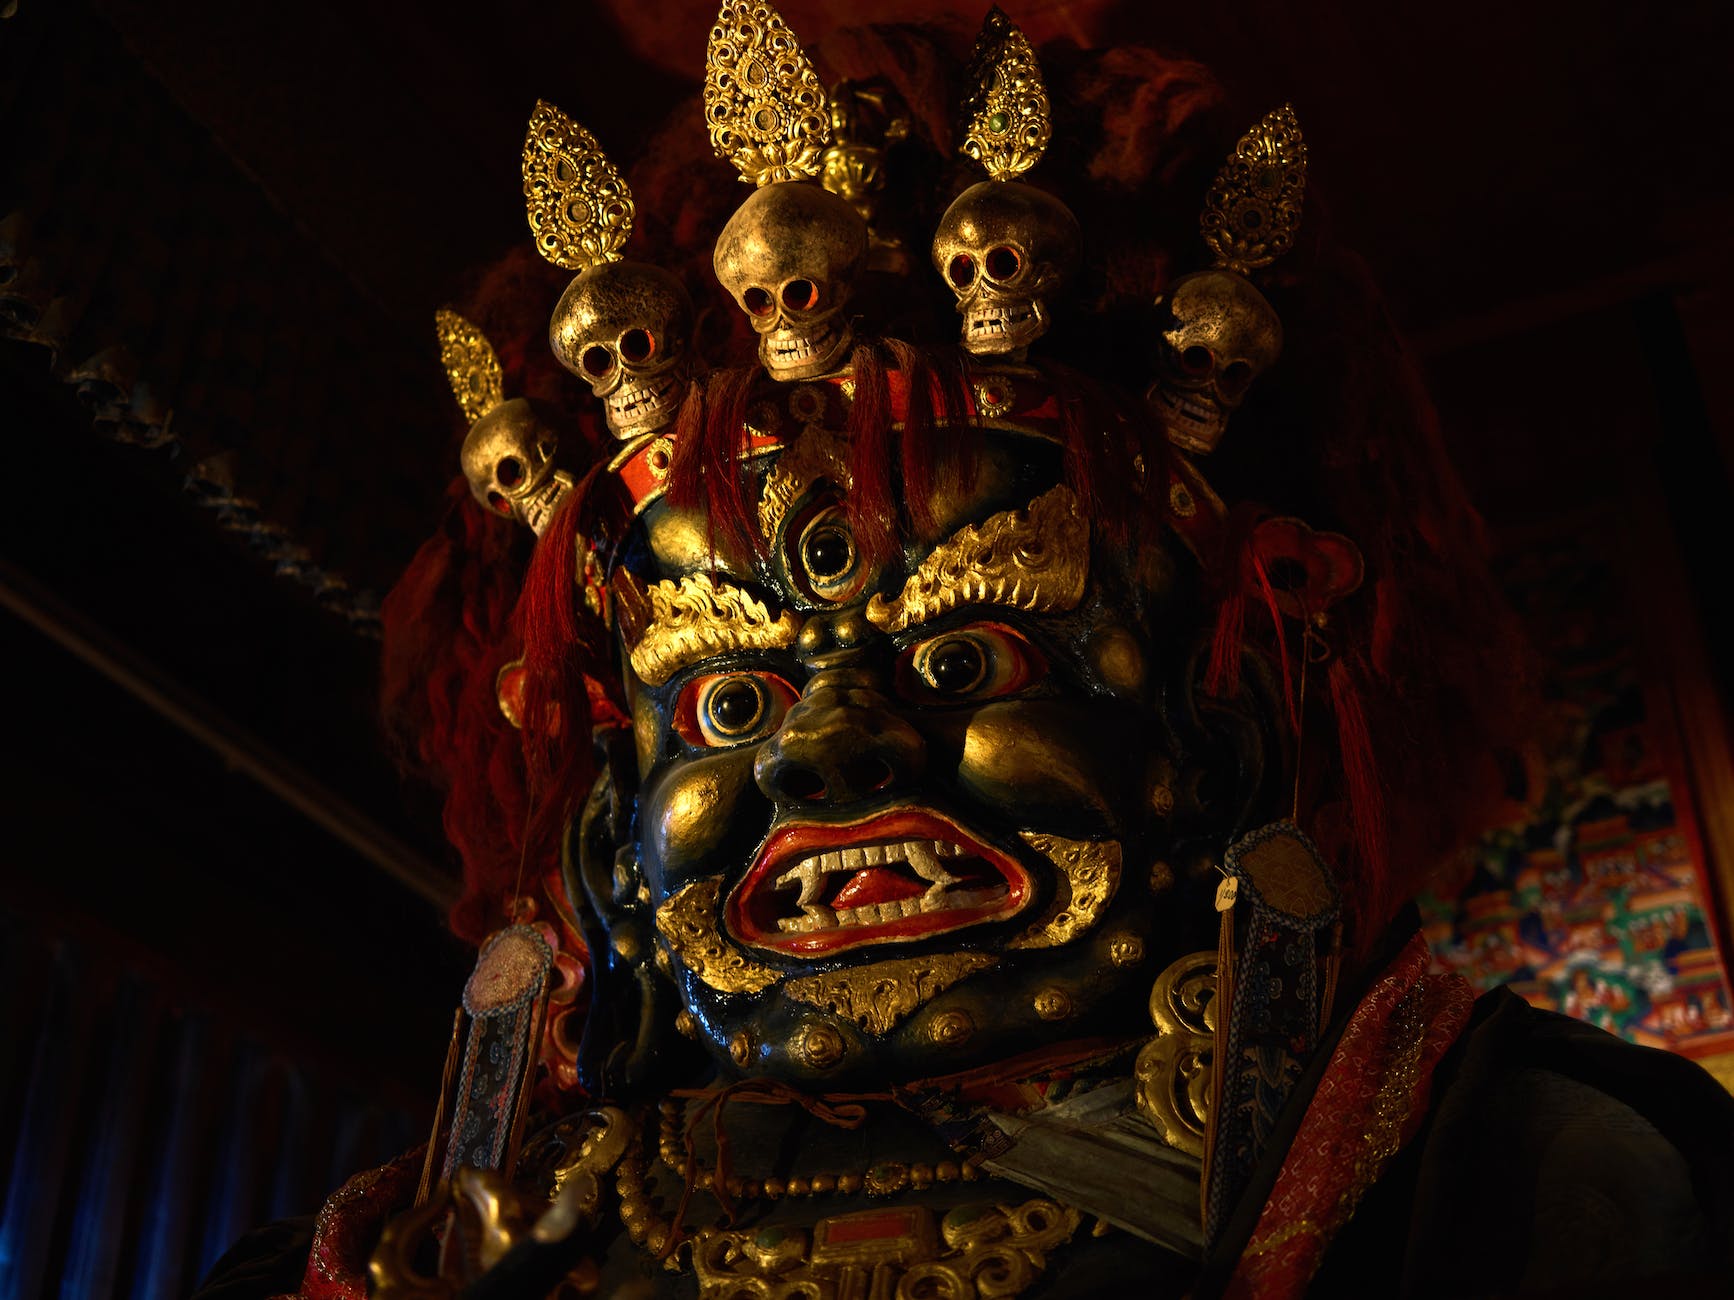 mask used for tsam mystery carnival